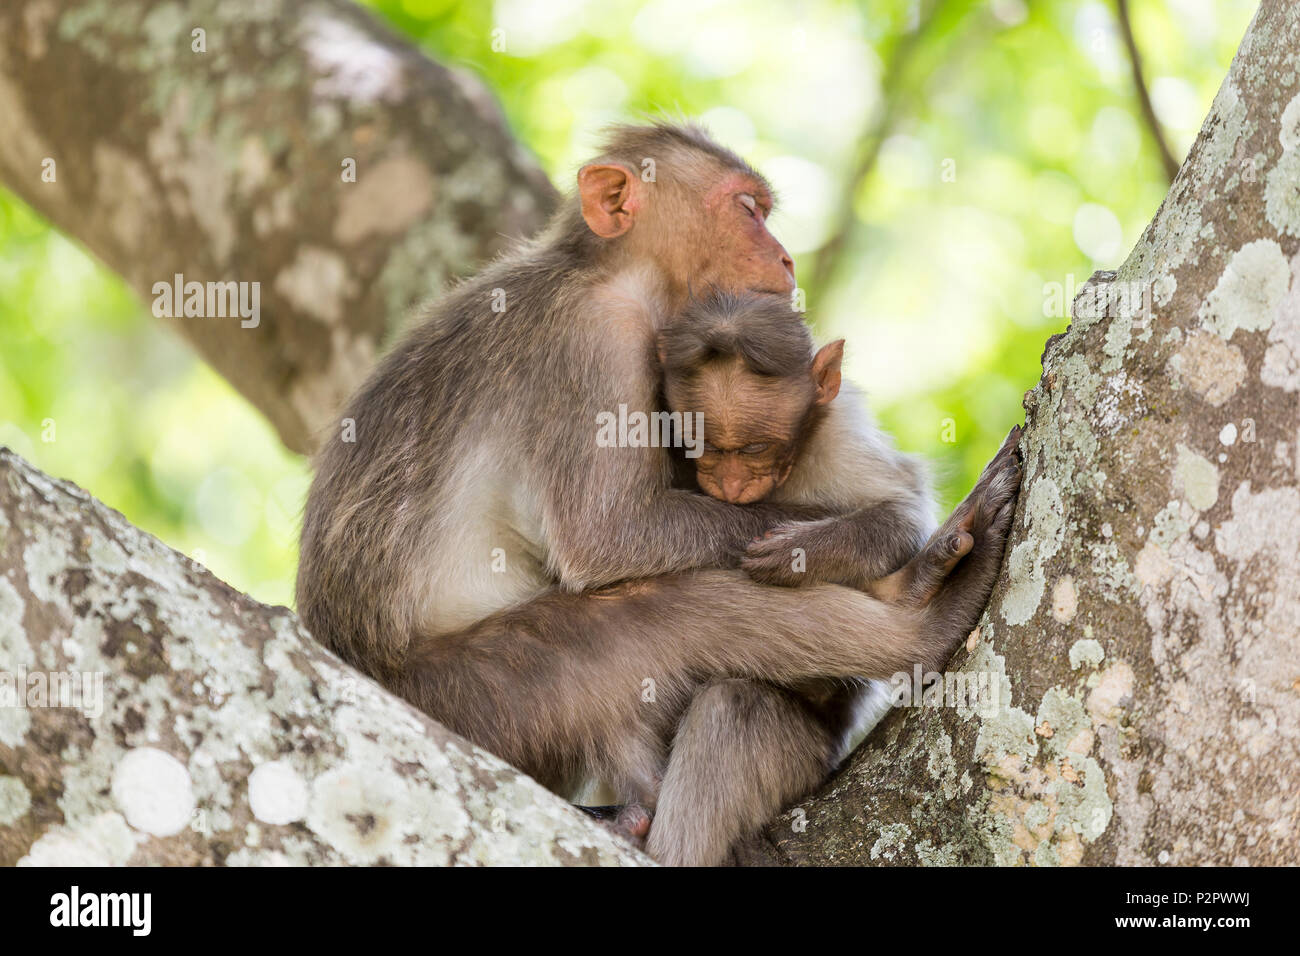 Bonnet macaque family (Macaca radiata) grooming and tendering each other. Bandipur National Park, Karnataka, India Stock Photo